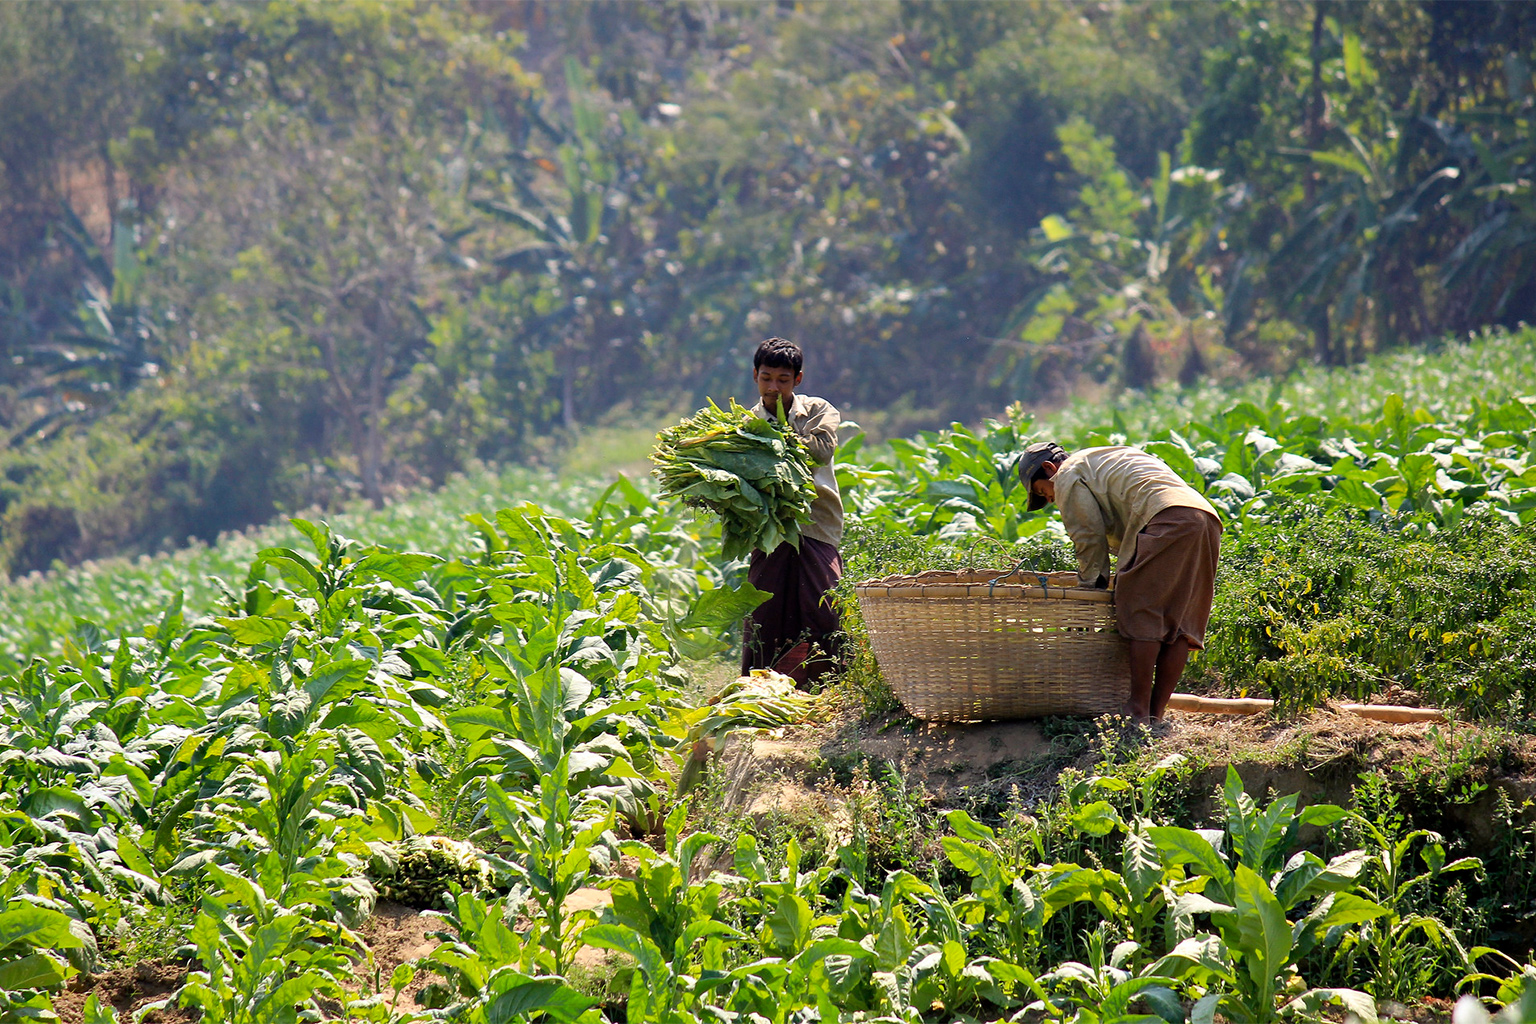 Tobacco farmers in Bangladesh.